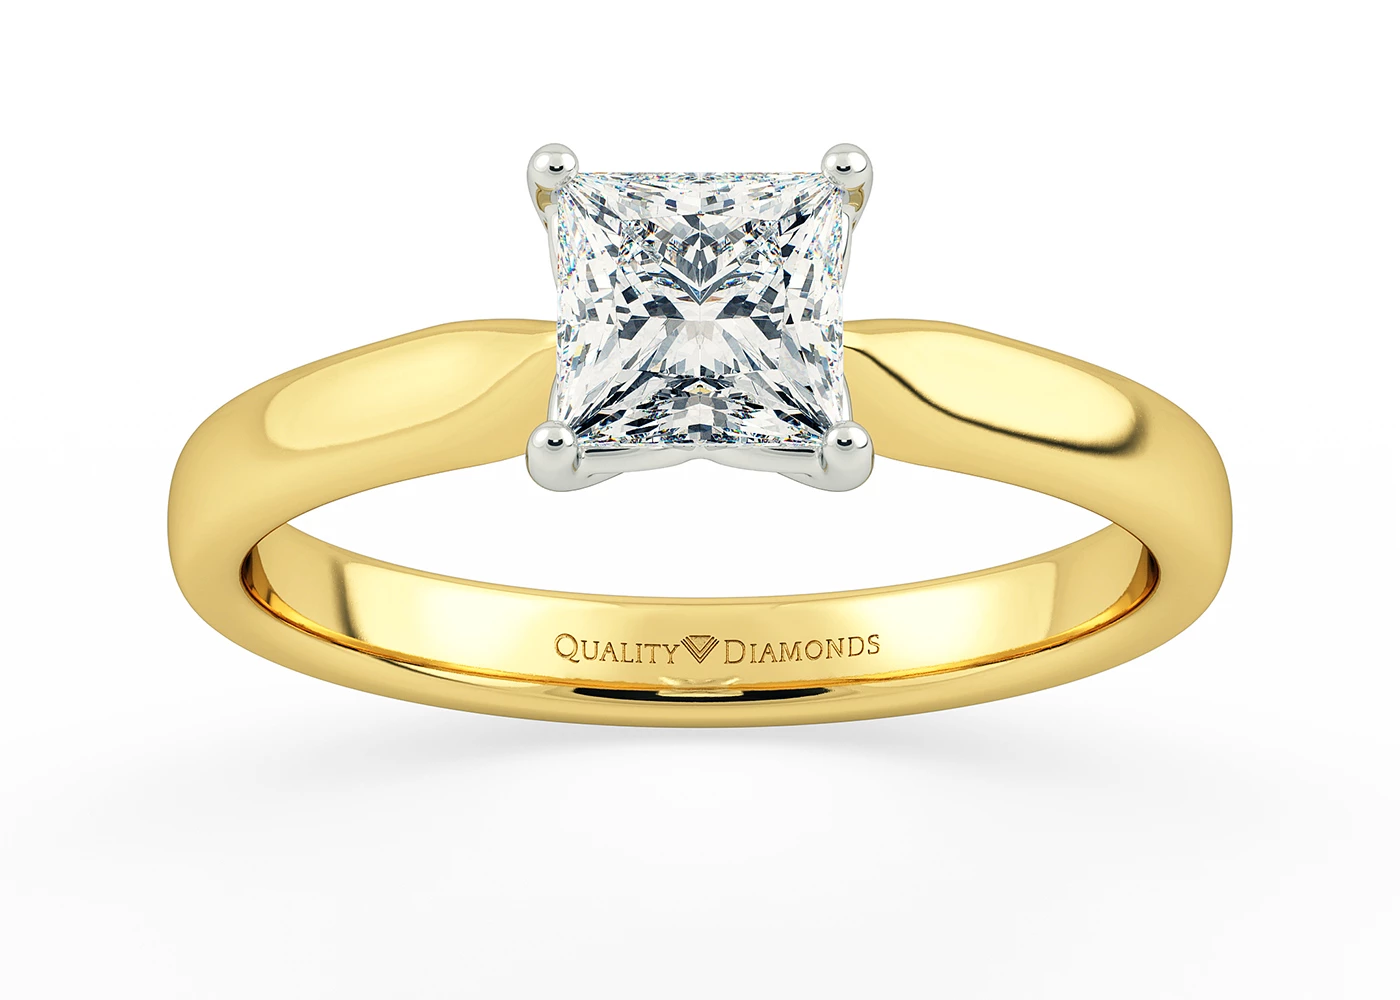 Princess Esme Diamond Rings in 18K Yellow Gold